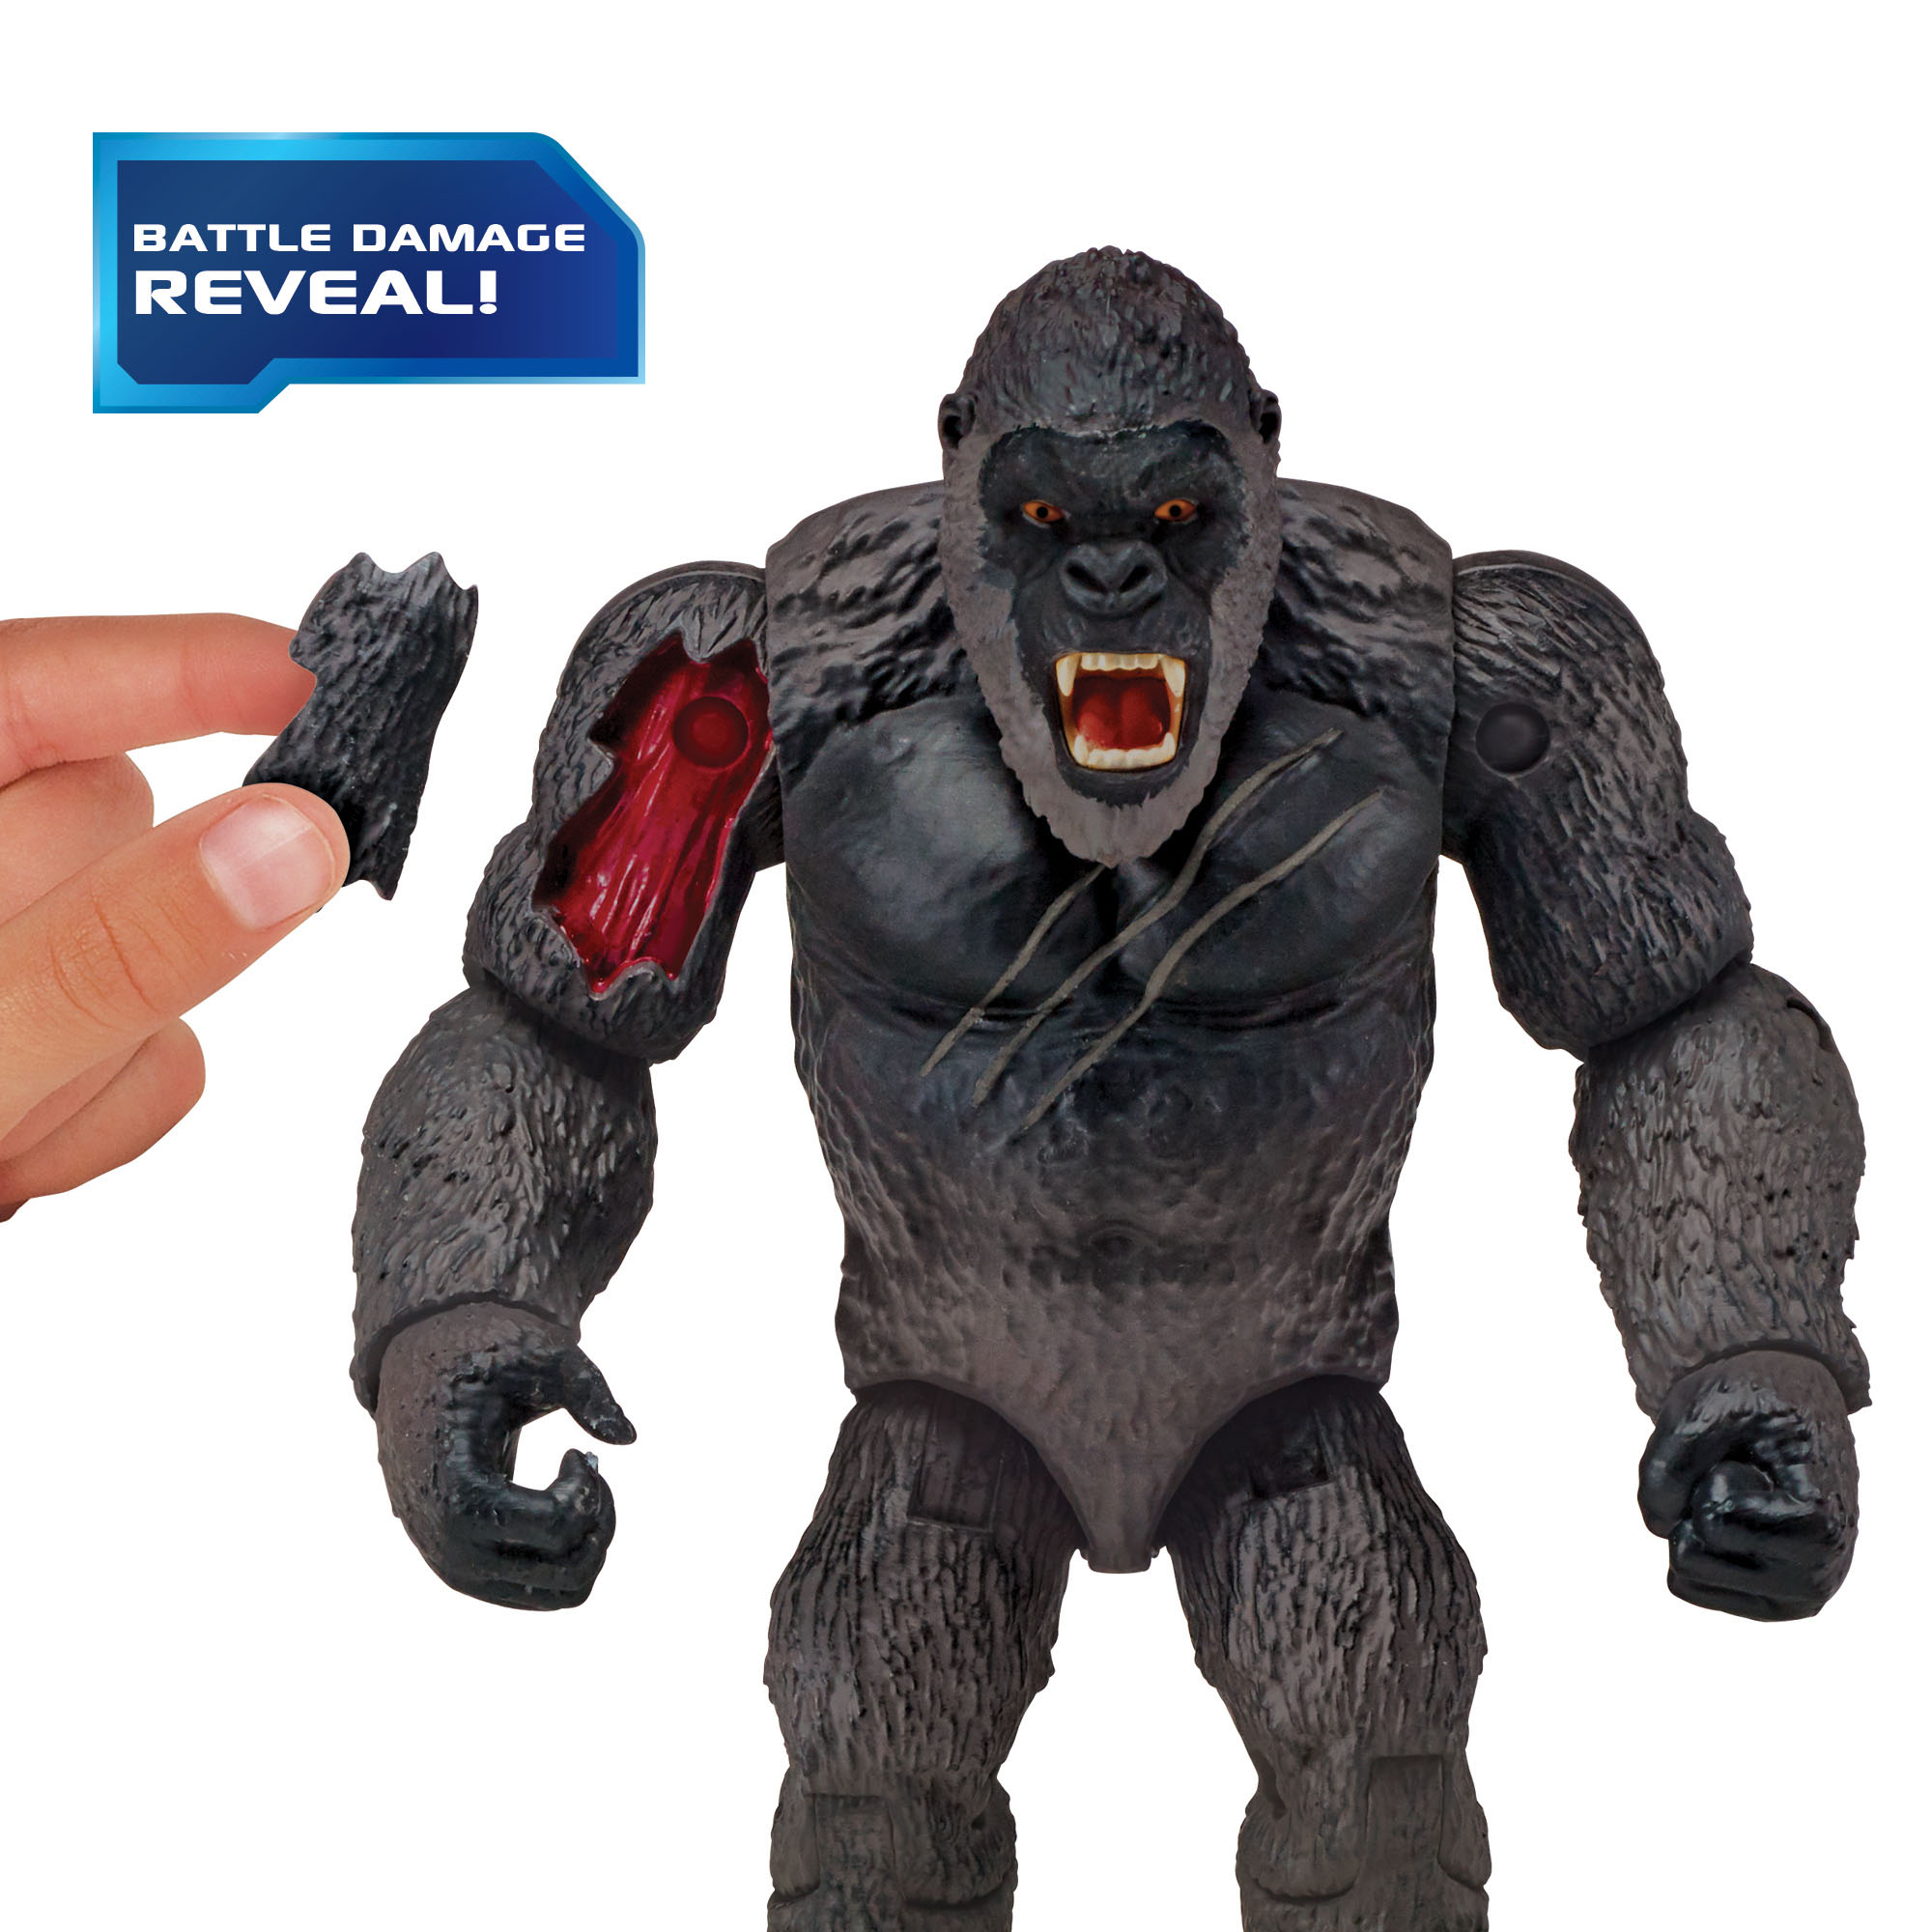 GIANT GODZILLA Legendary Godzilla Vs Playmates 11" Tall Figure NEW Kong 